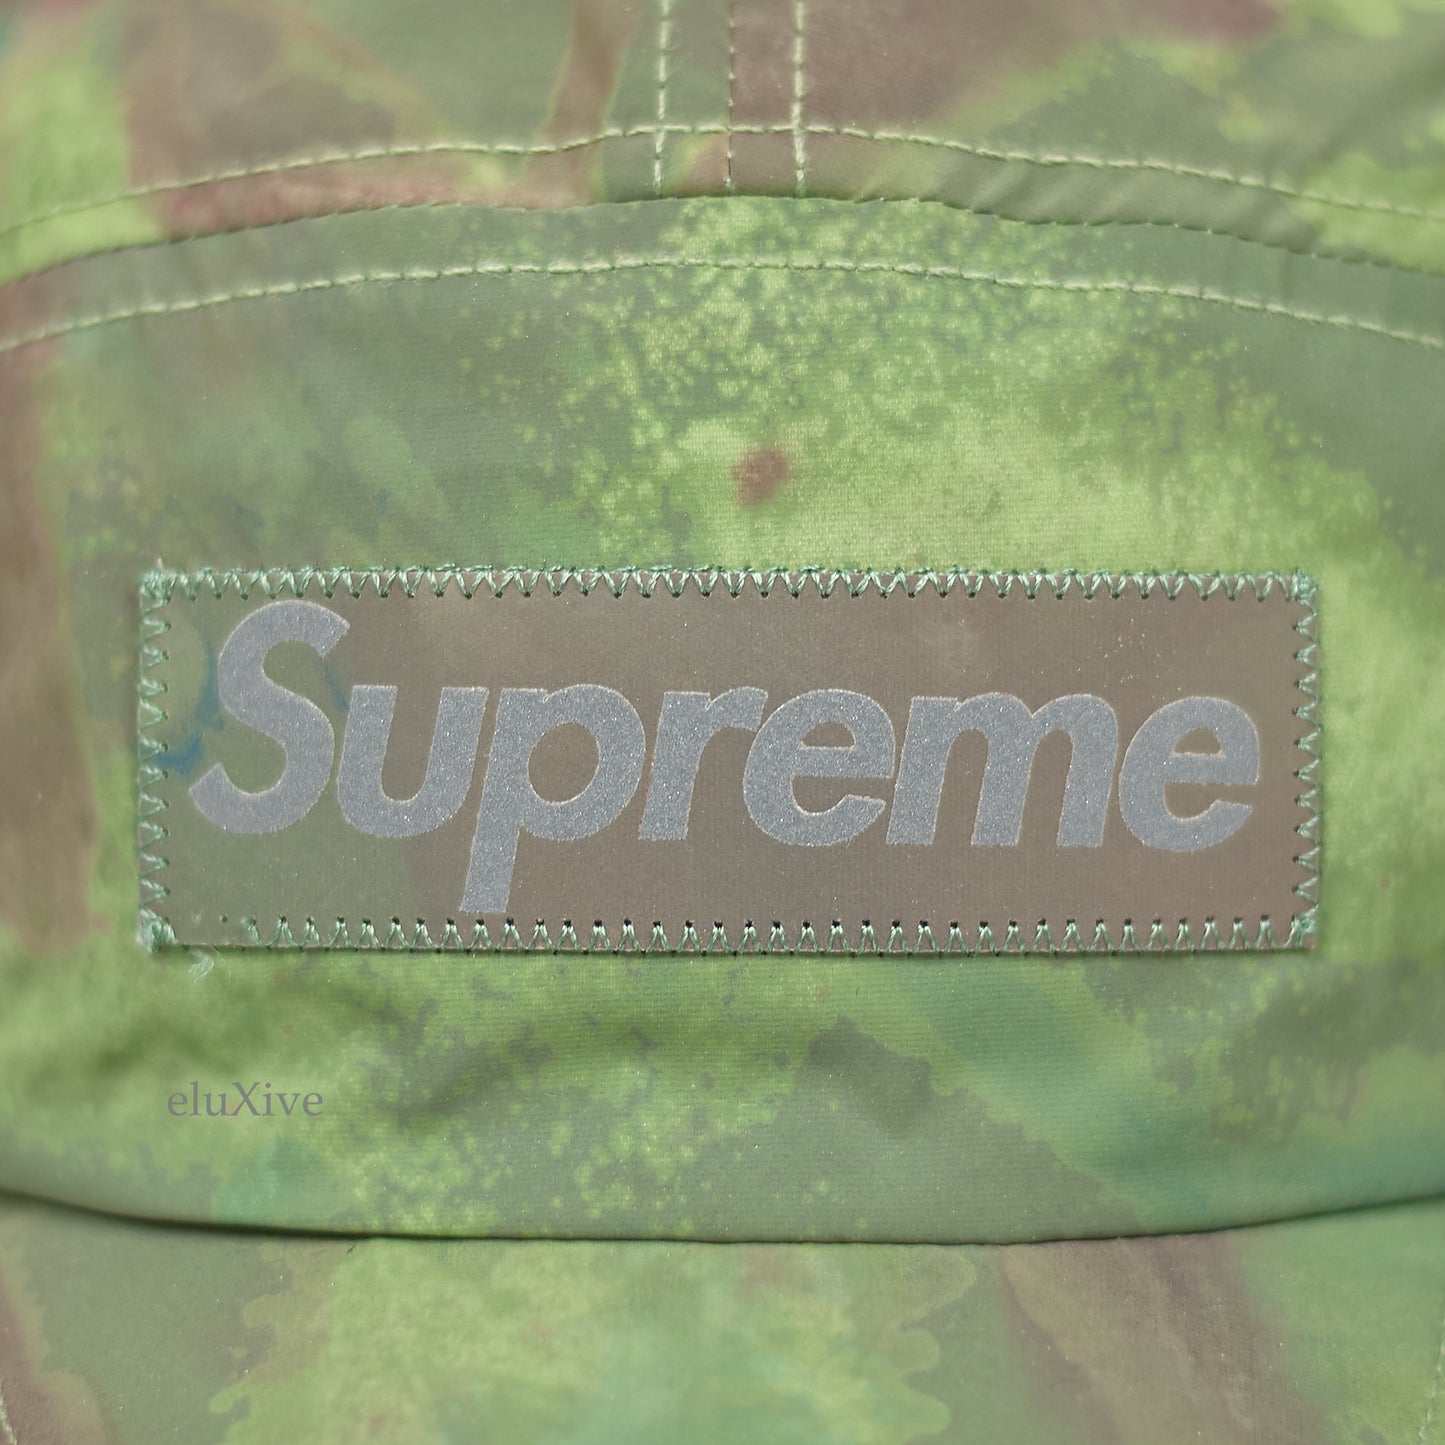 Supreme - Reflective Dyed Box Logo Hat (Green)